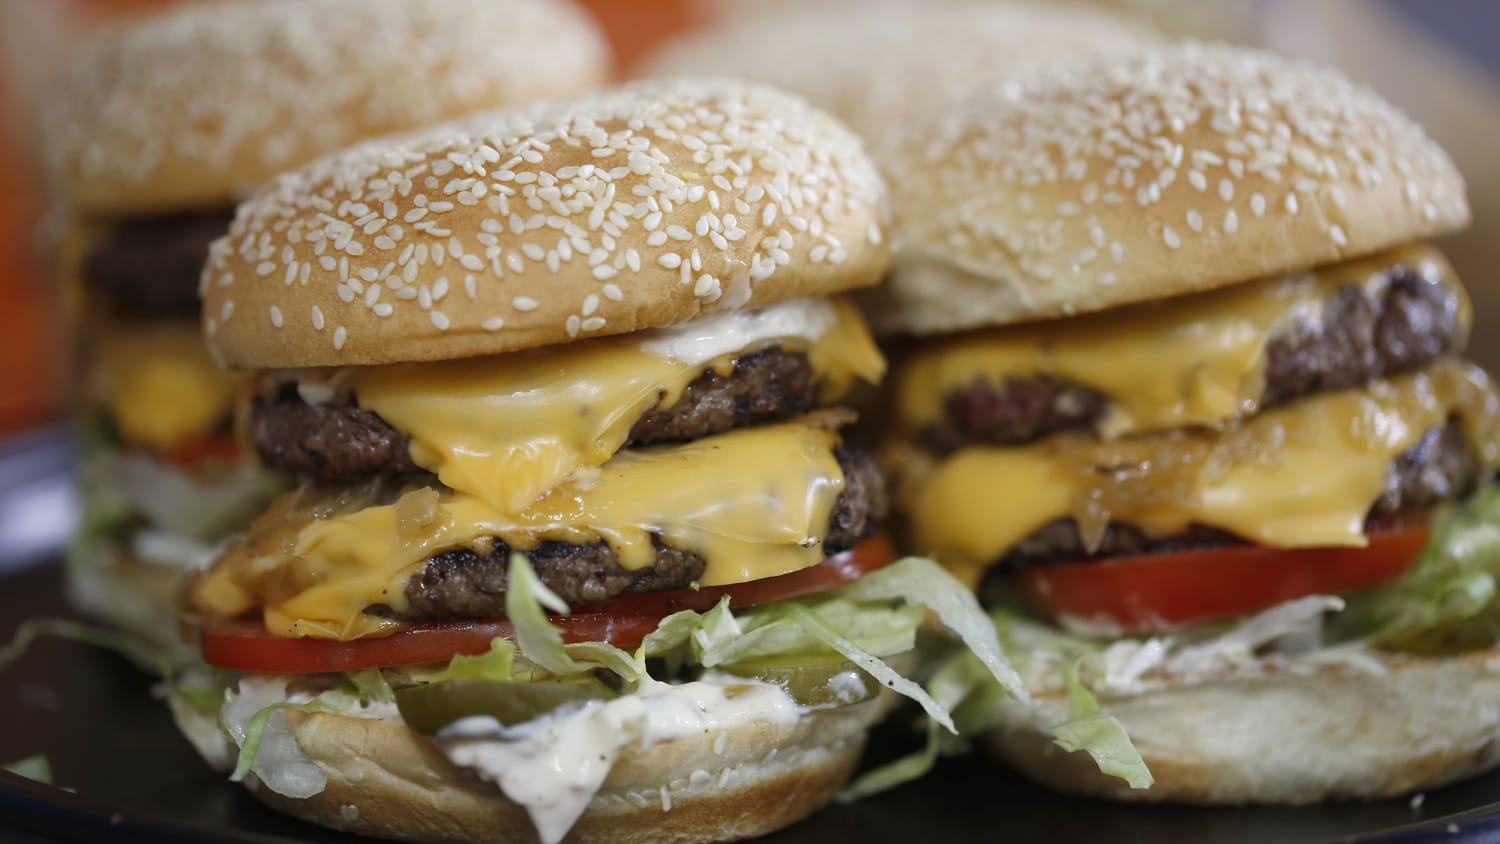 Double Cheeseburger, Medium Fries - Metacritic